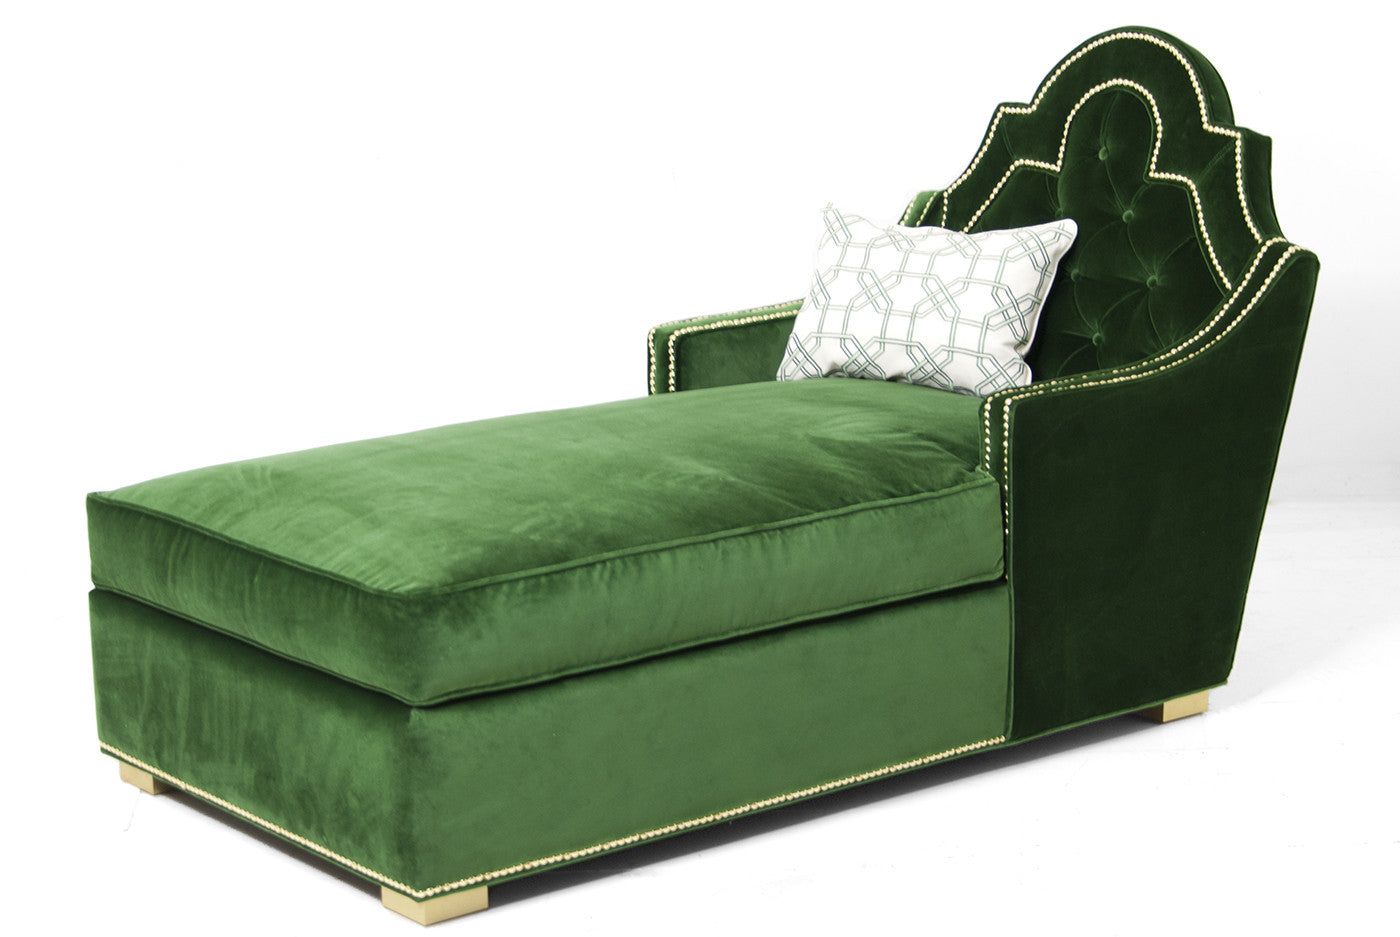 Marrakesh Chaise Lounge in Emerald Velvet - ModShop1.com